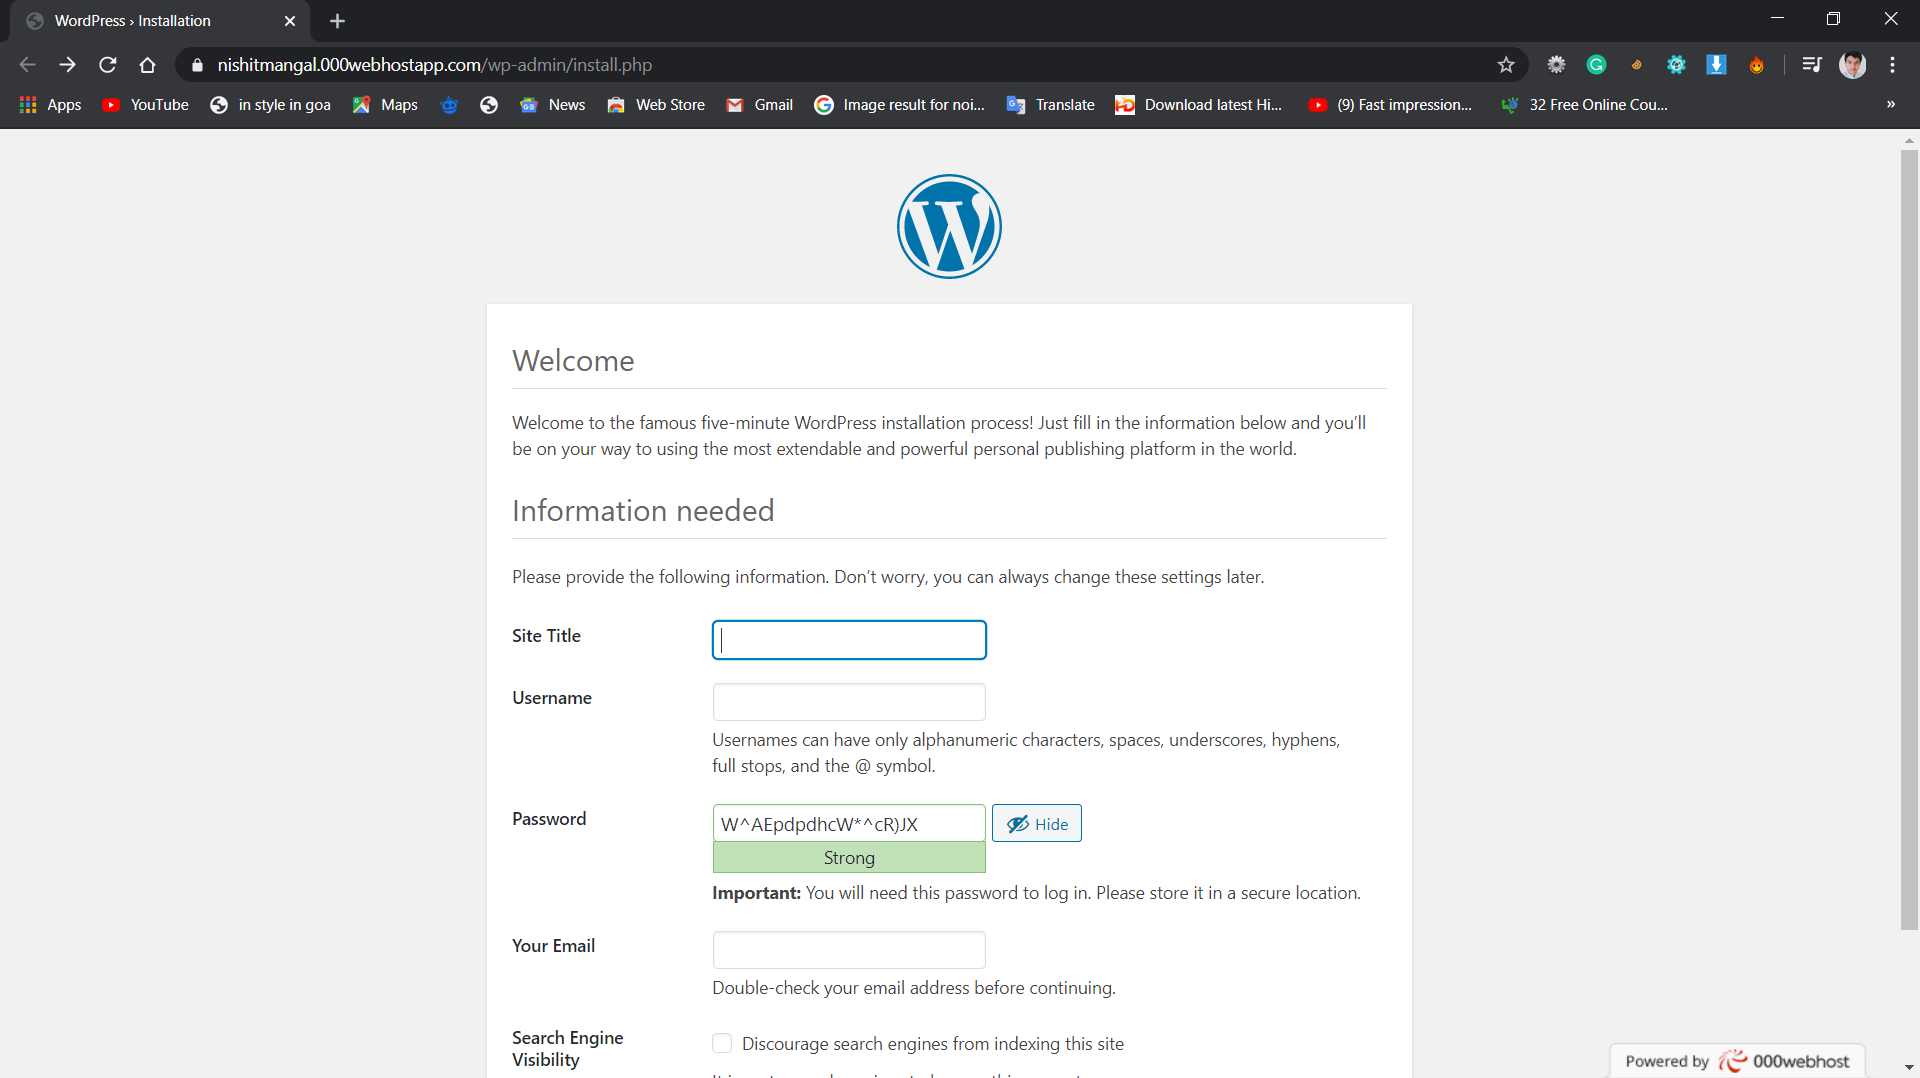 WordPress › Installation - Google Chrome 28-03-2020 13_41_49